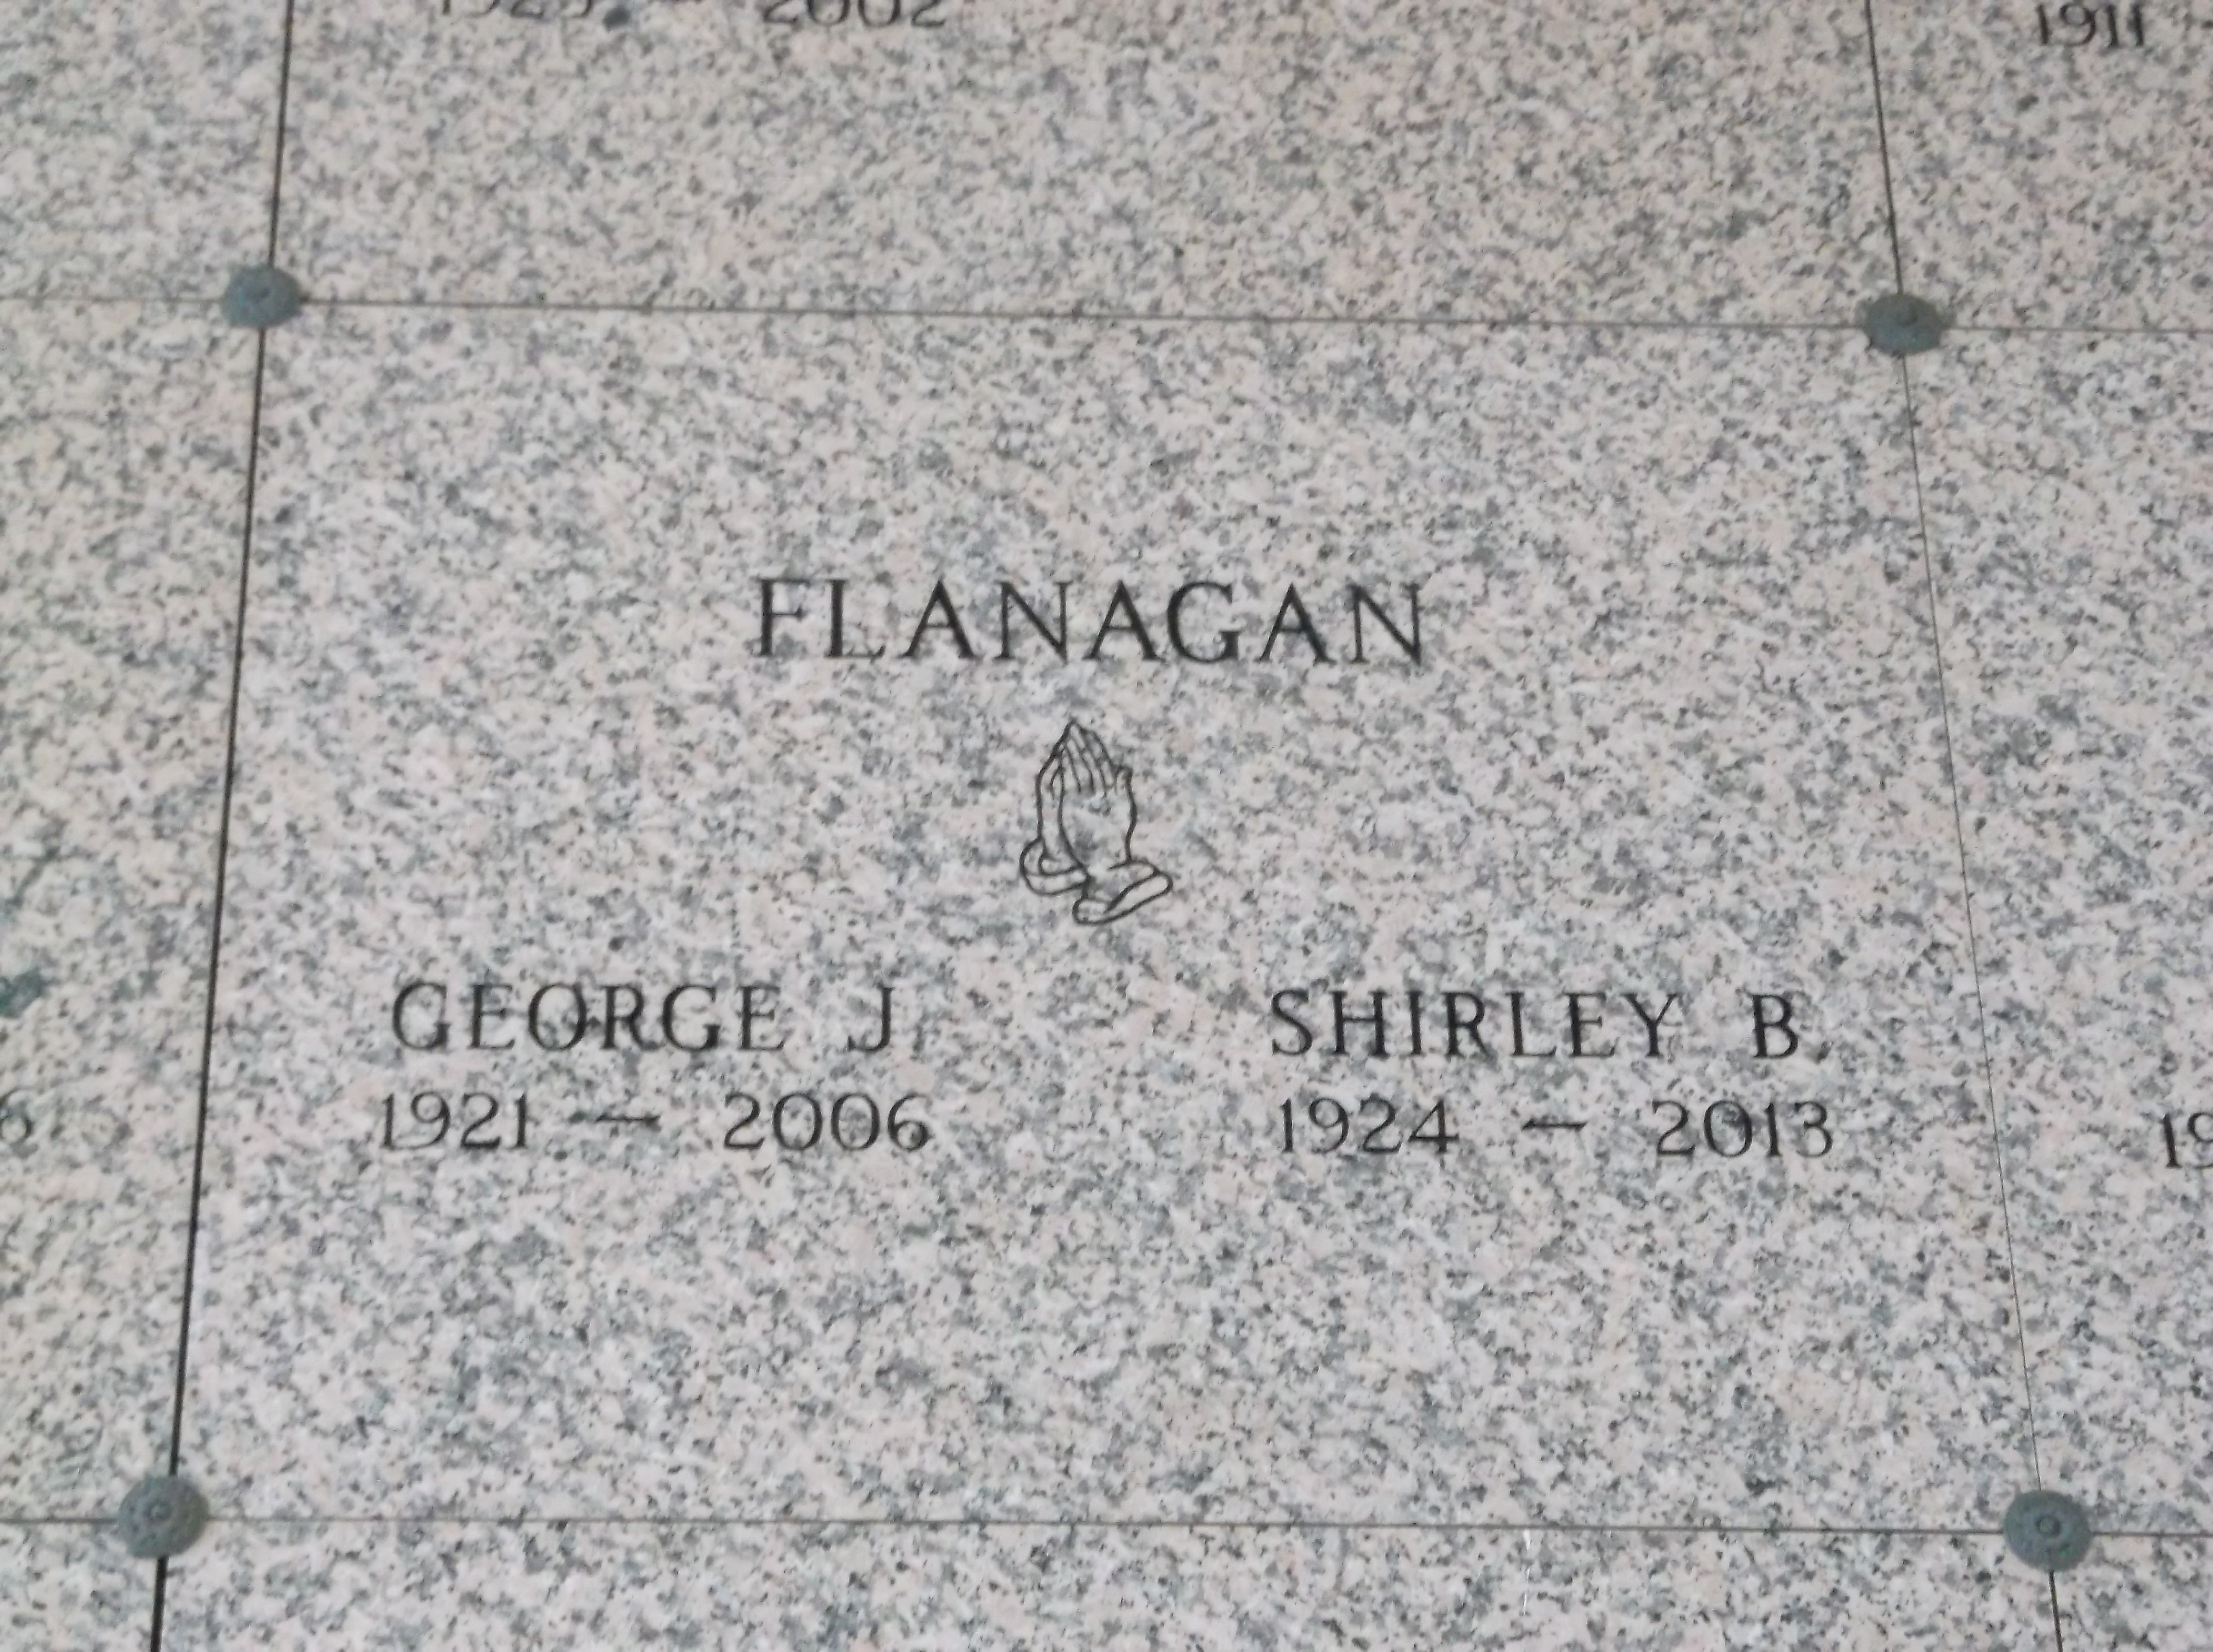 Shirley B Flanagan